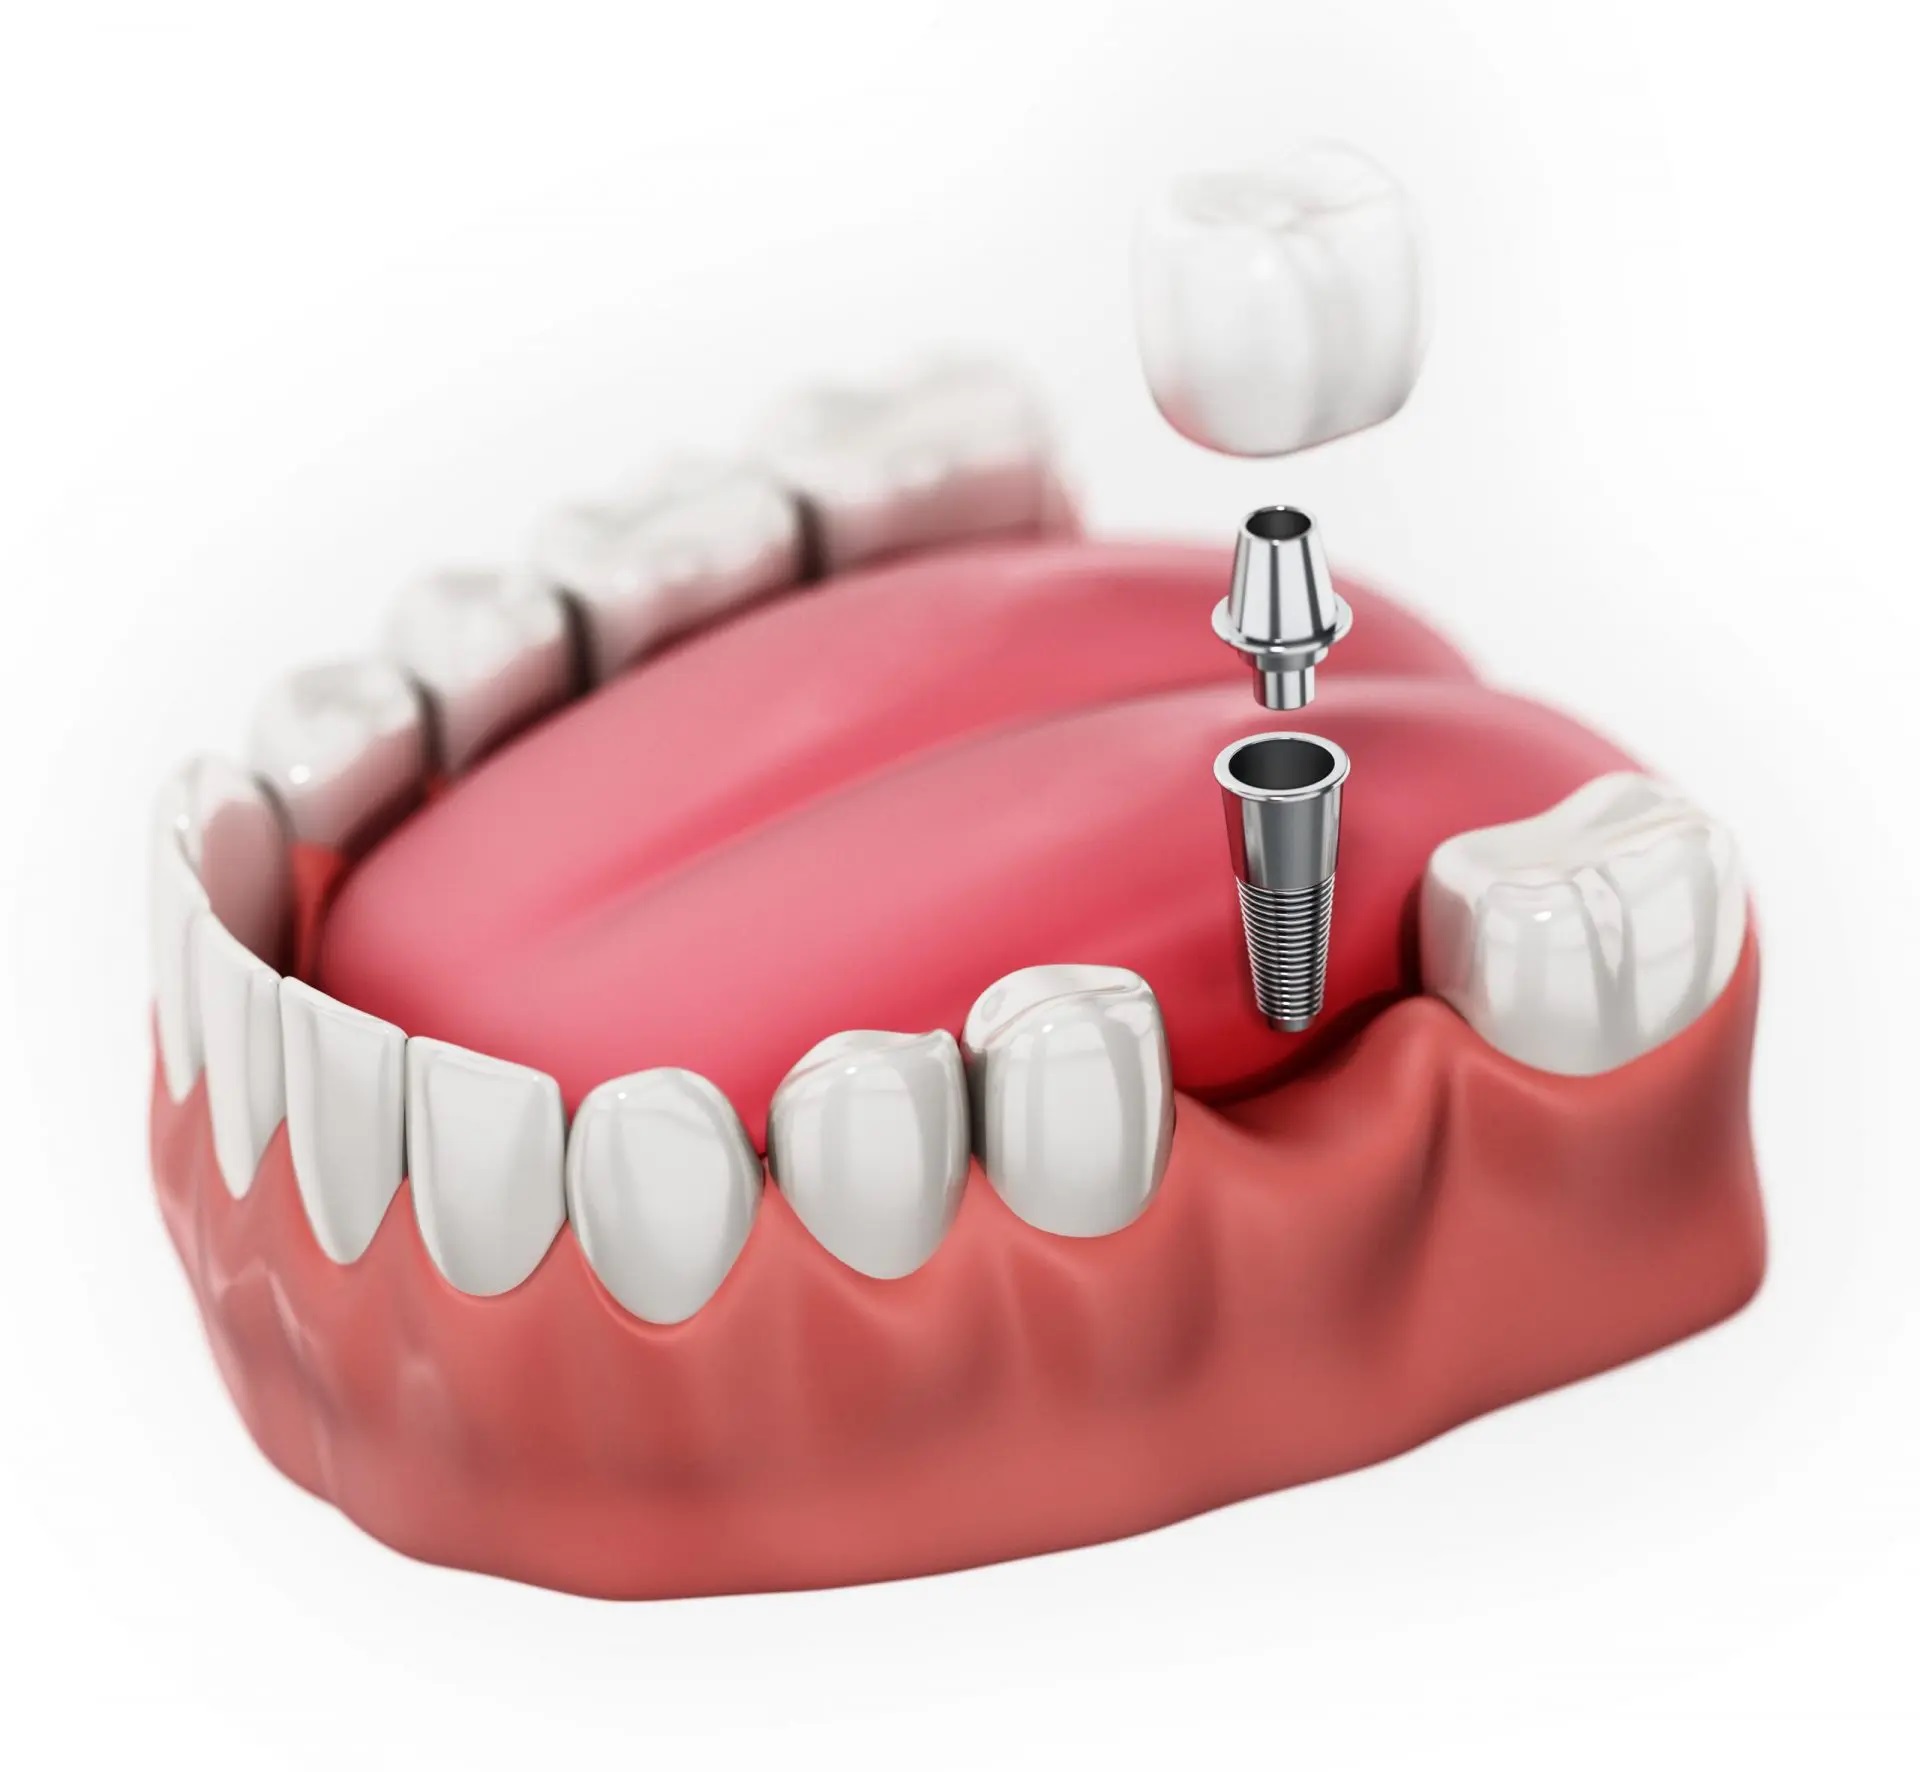 Molar Tooth Implant Animation